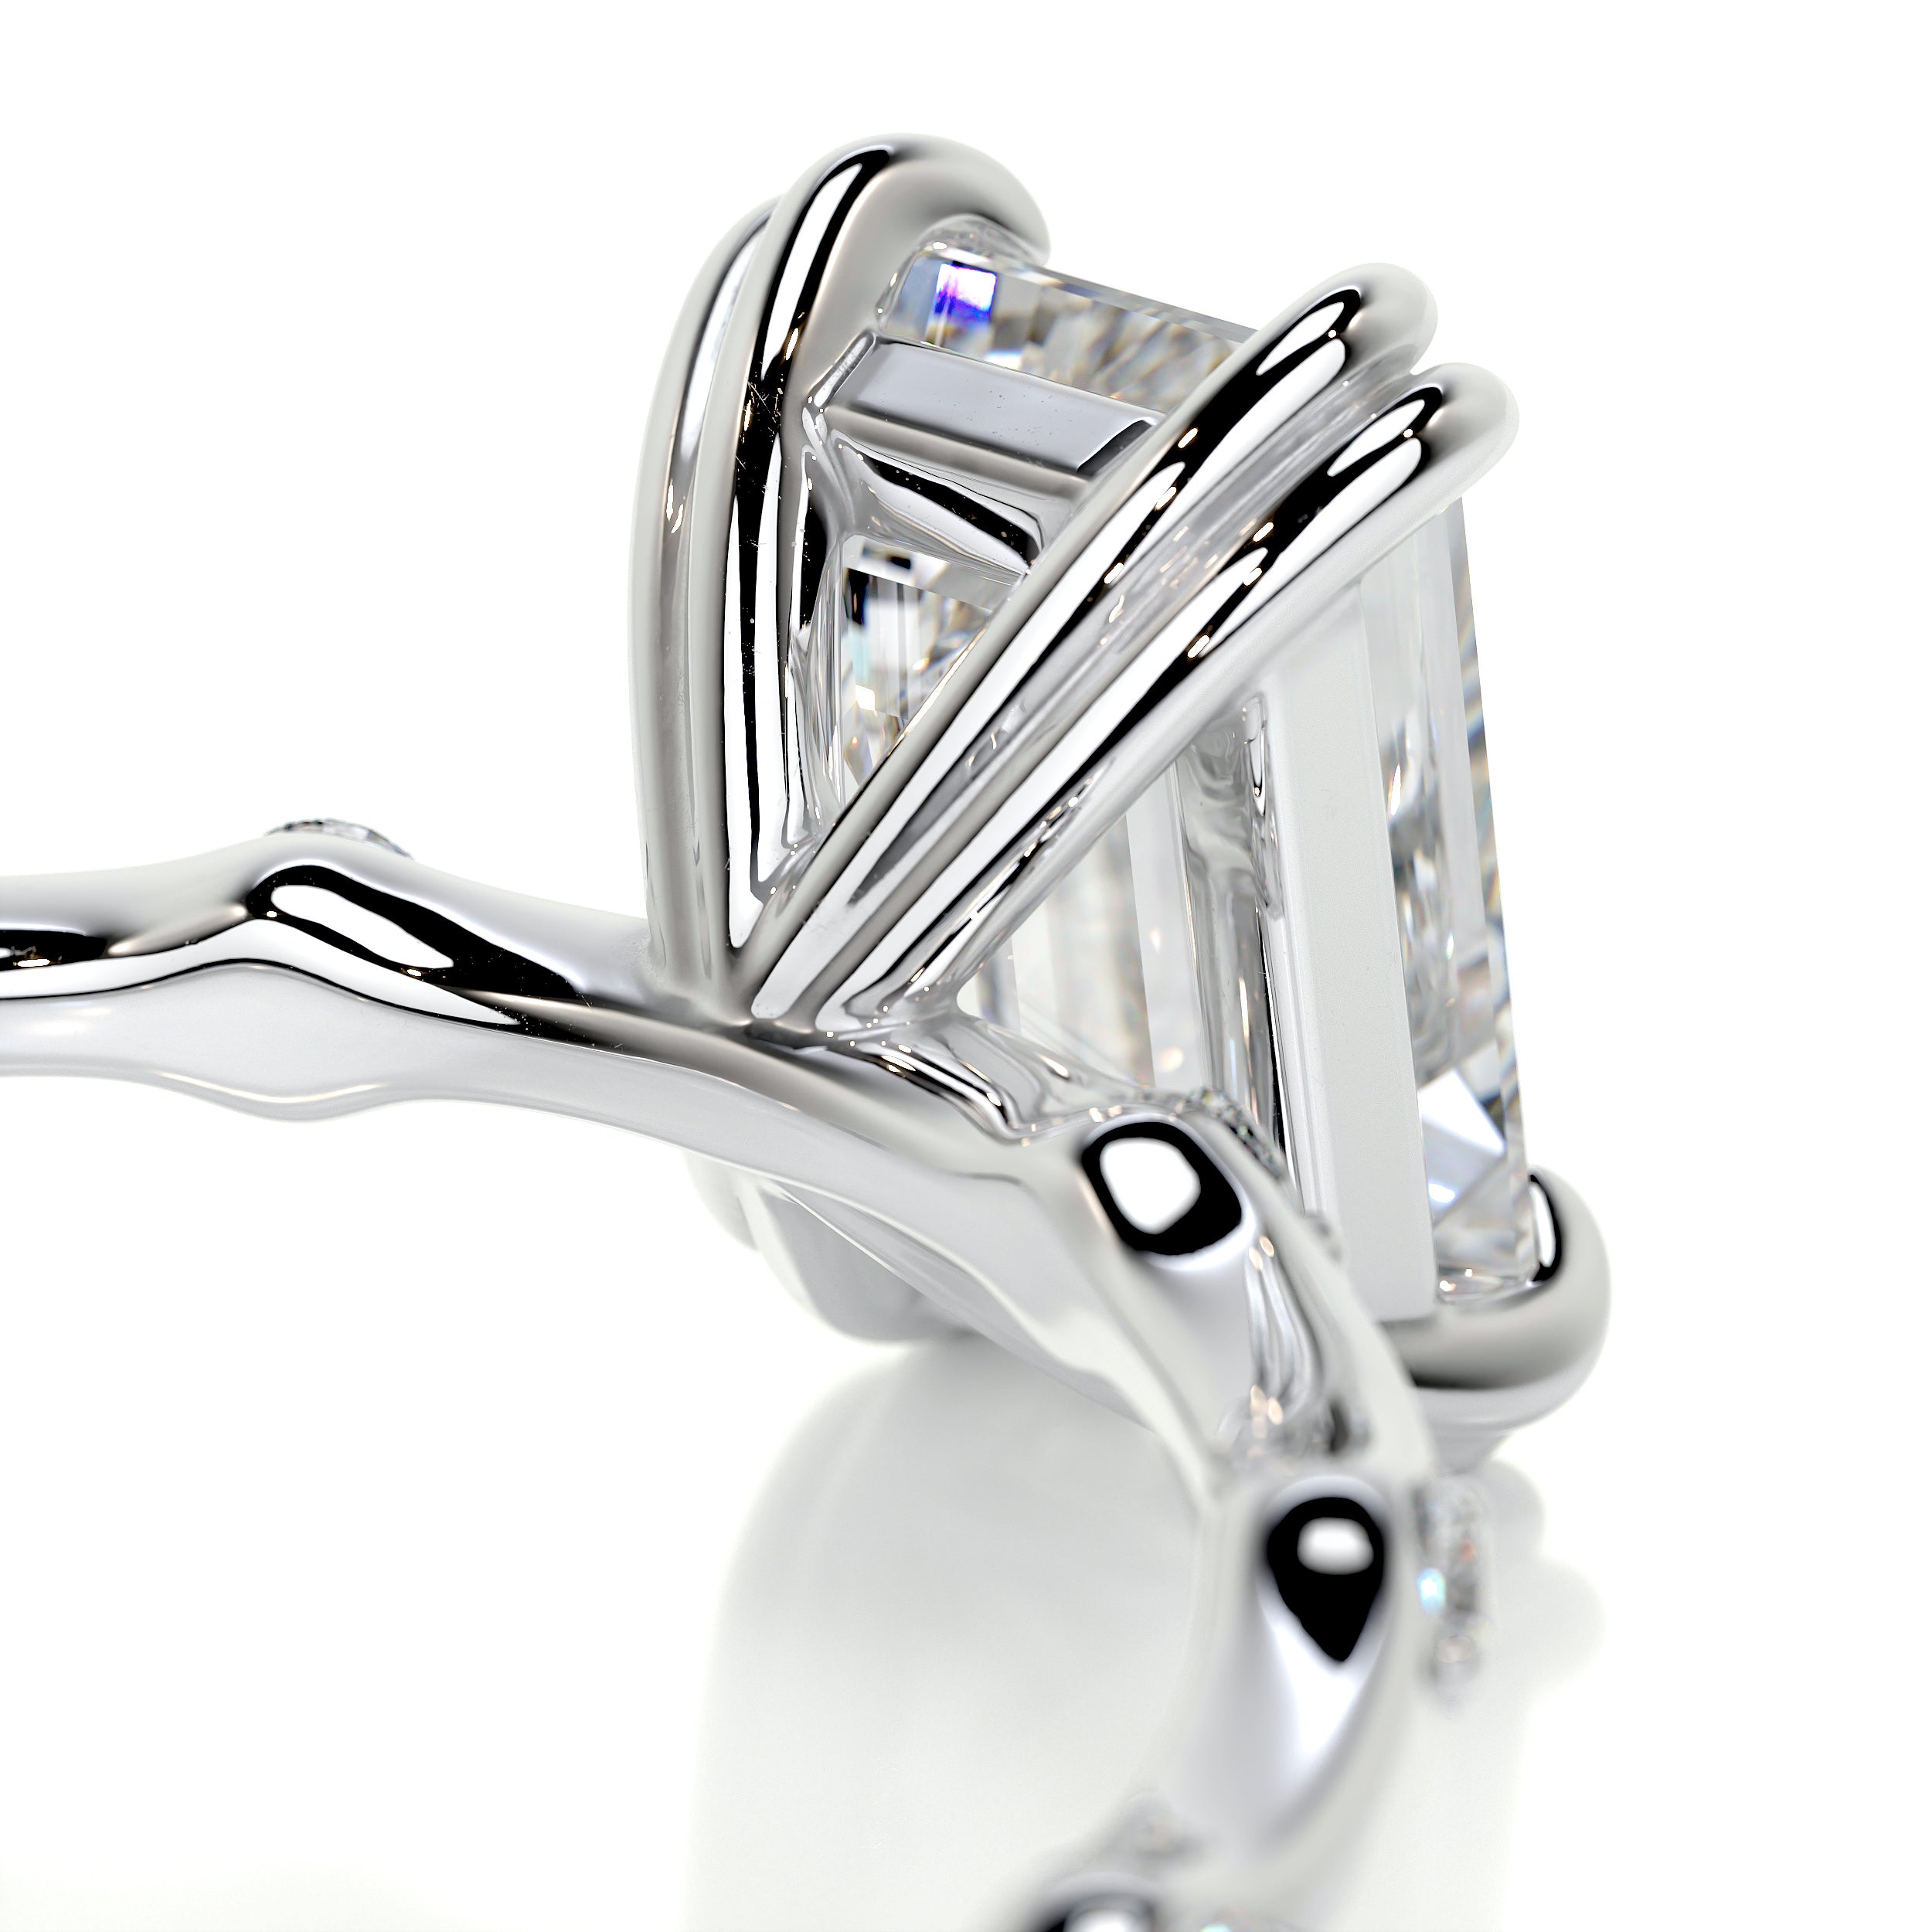 Wilma Diamond Engagement Ring -14K White Gold